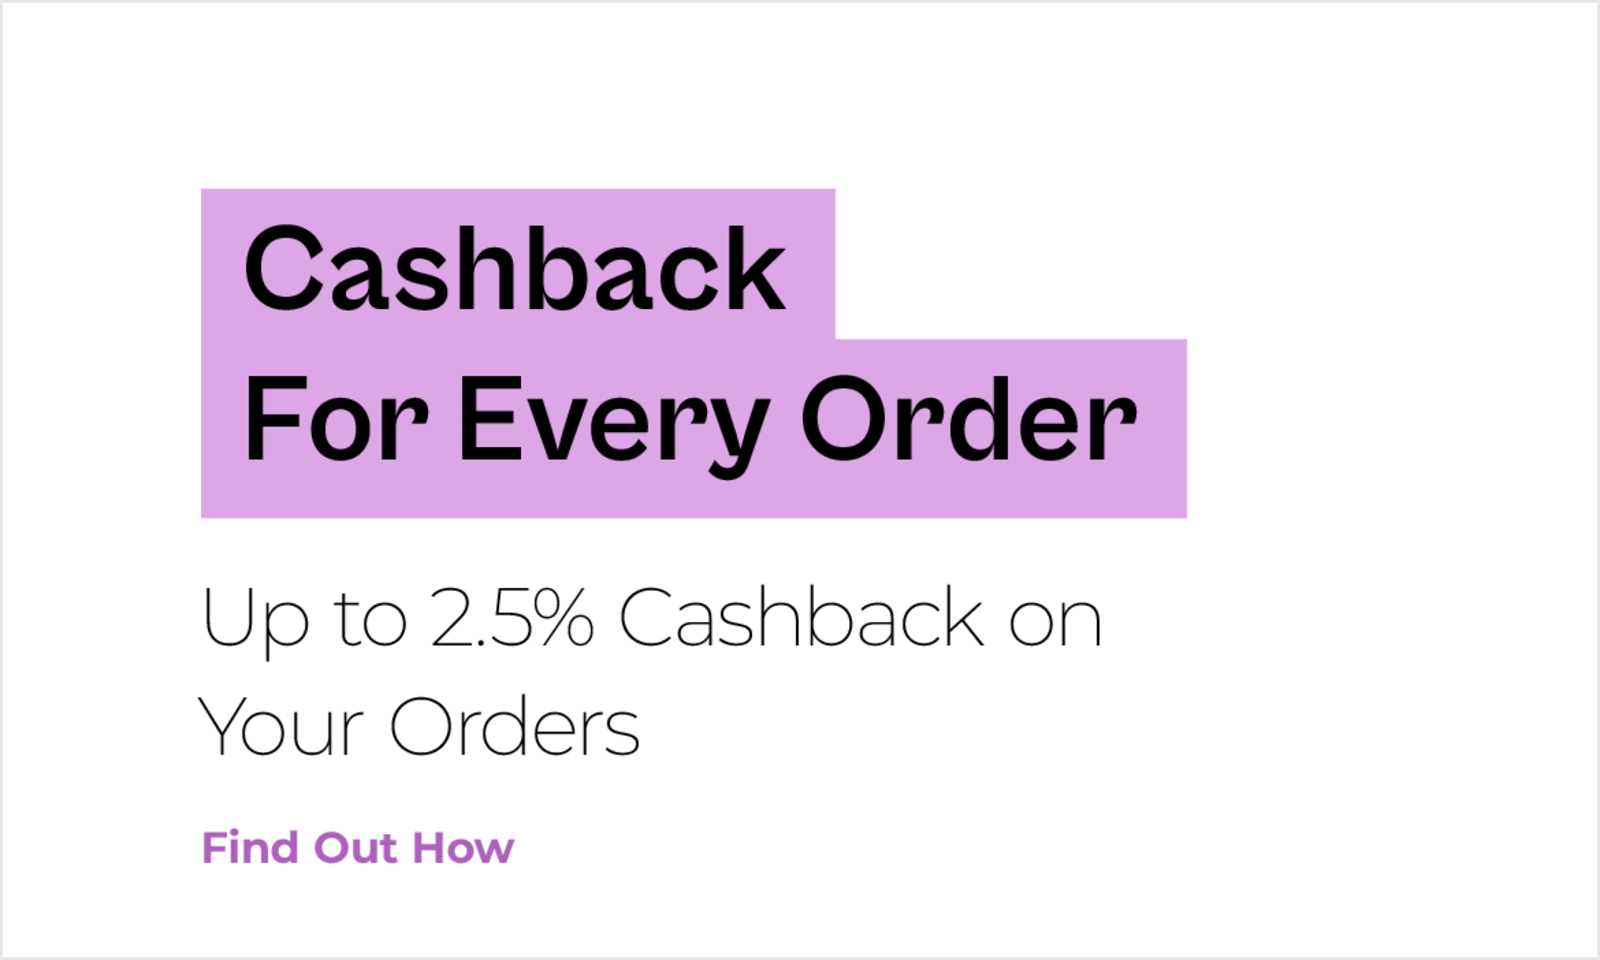 Cashback For Every Order